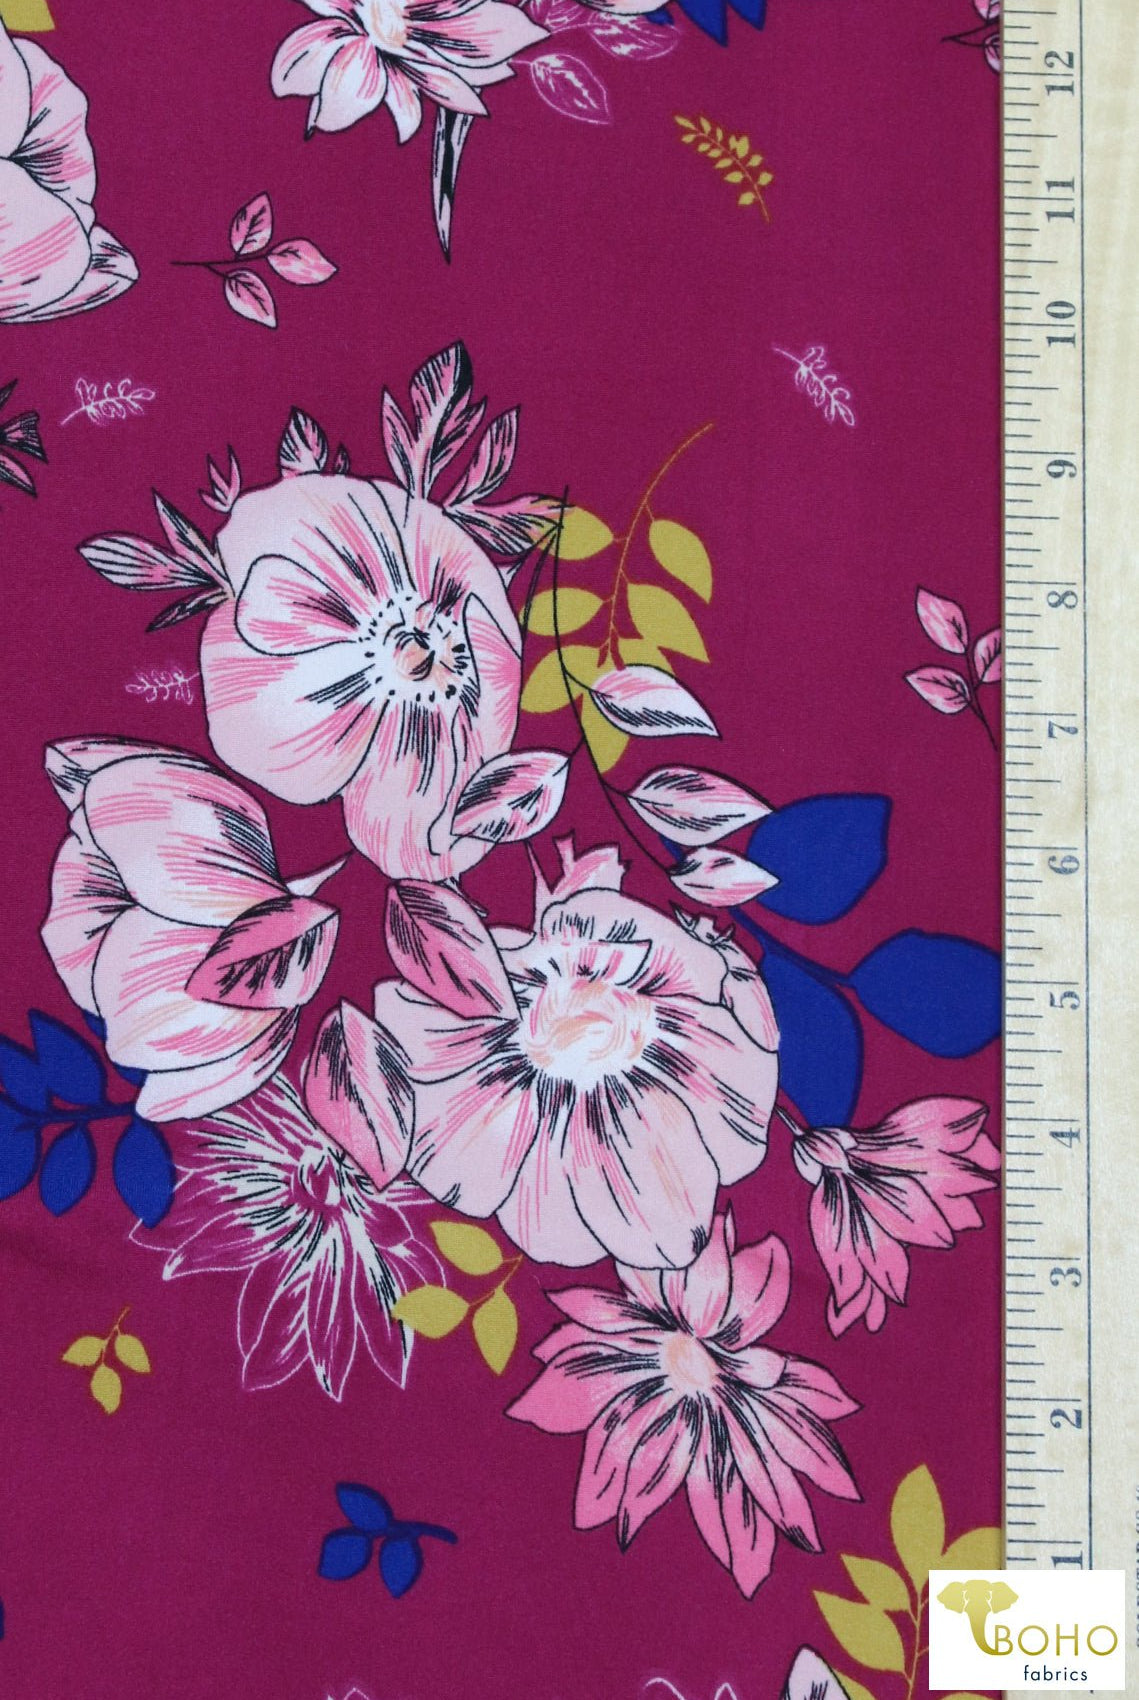 Last Cuts! Zinnia Dreams, Double Brushed Poly Print. BPP-305 - Boho Fabrics